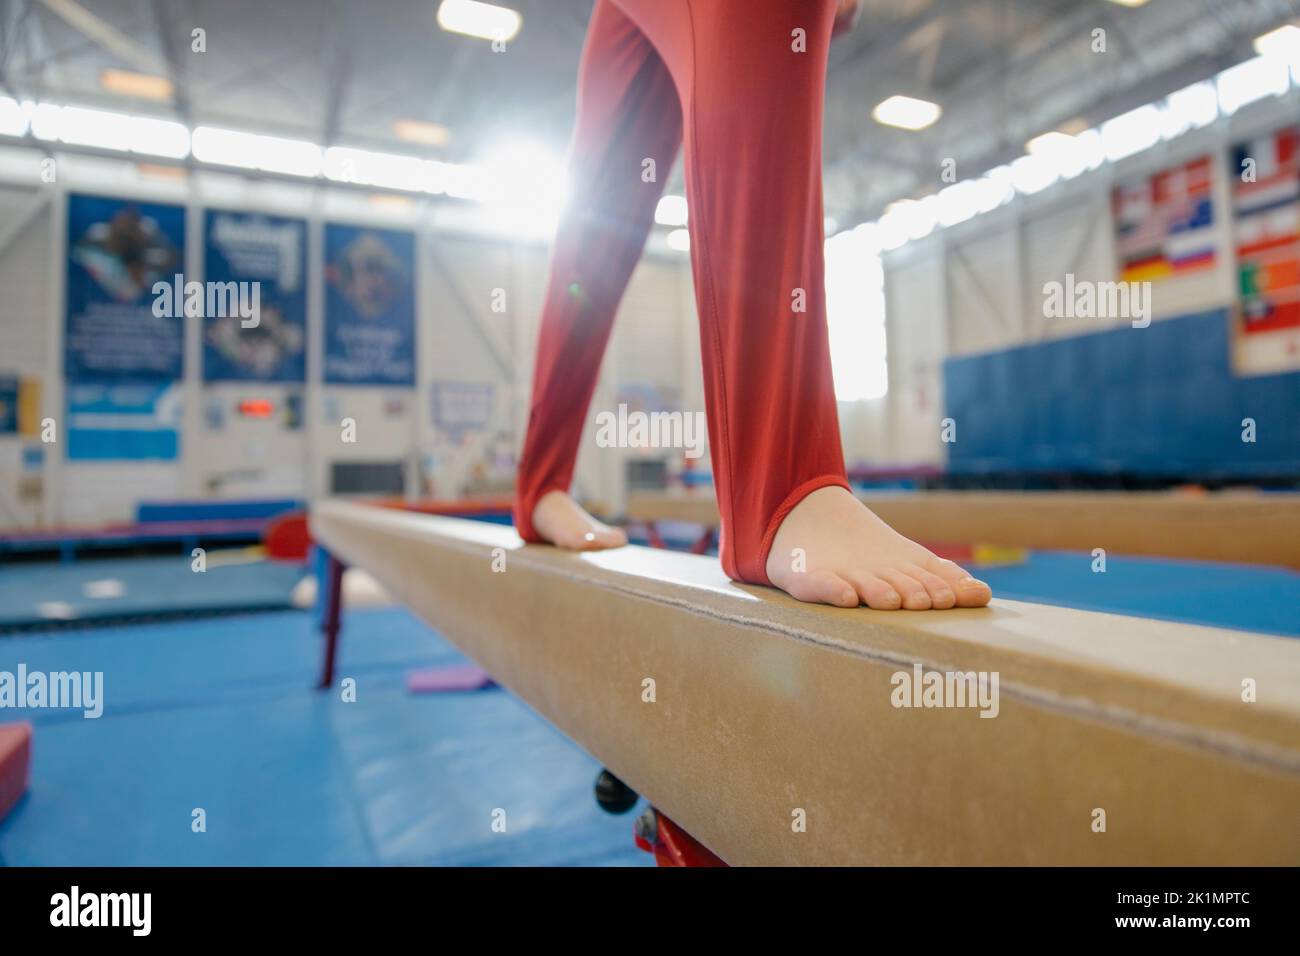 Boy on balance beam in gymnasium Stock Photo